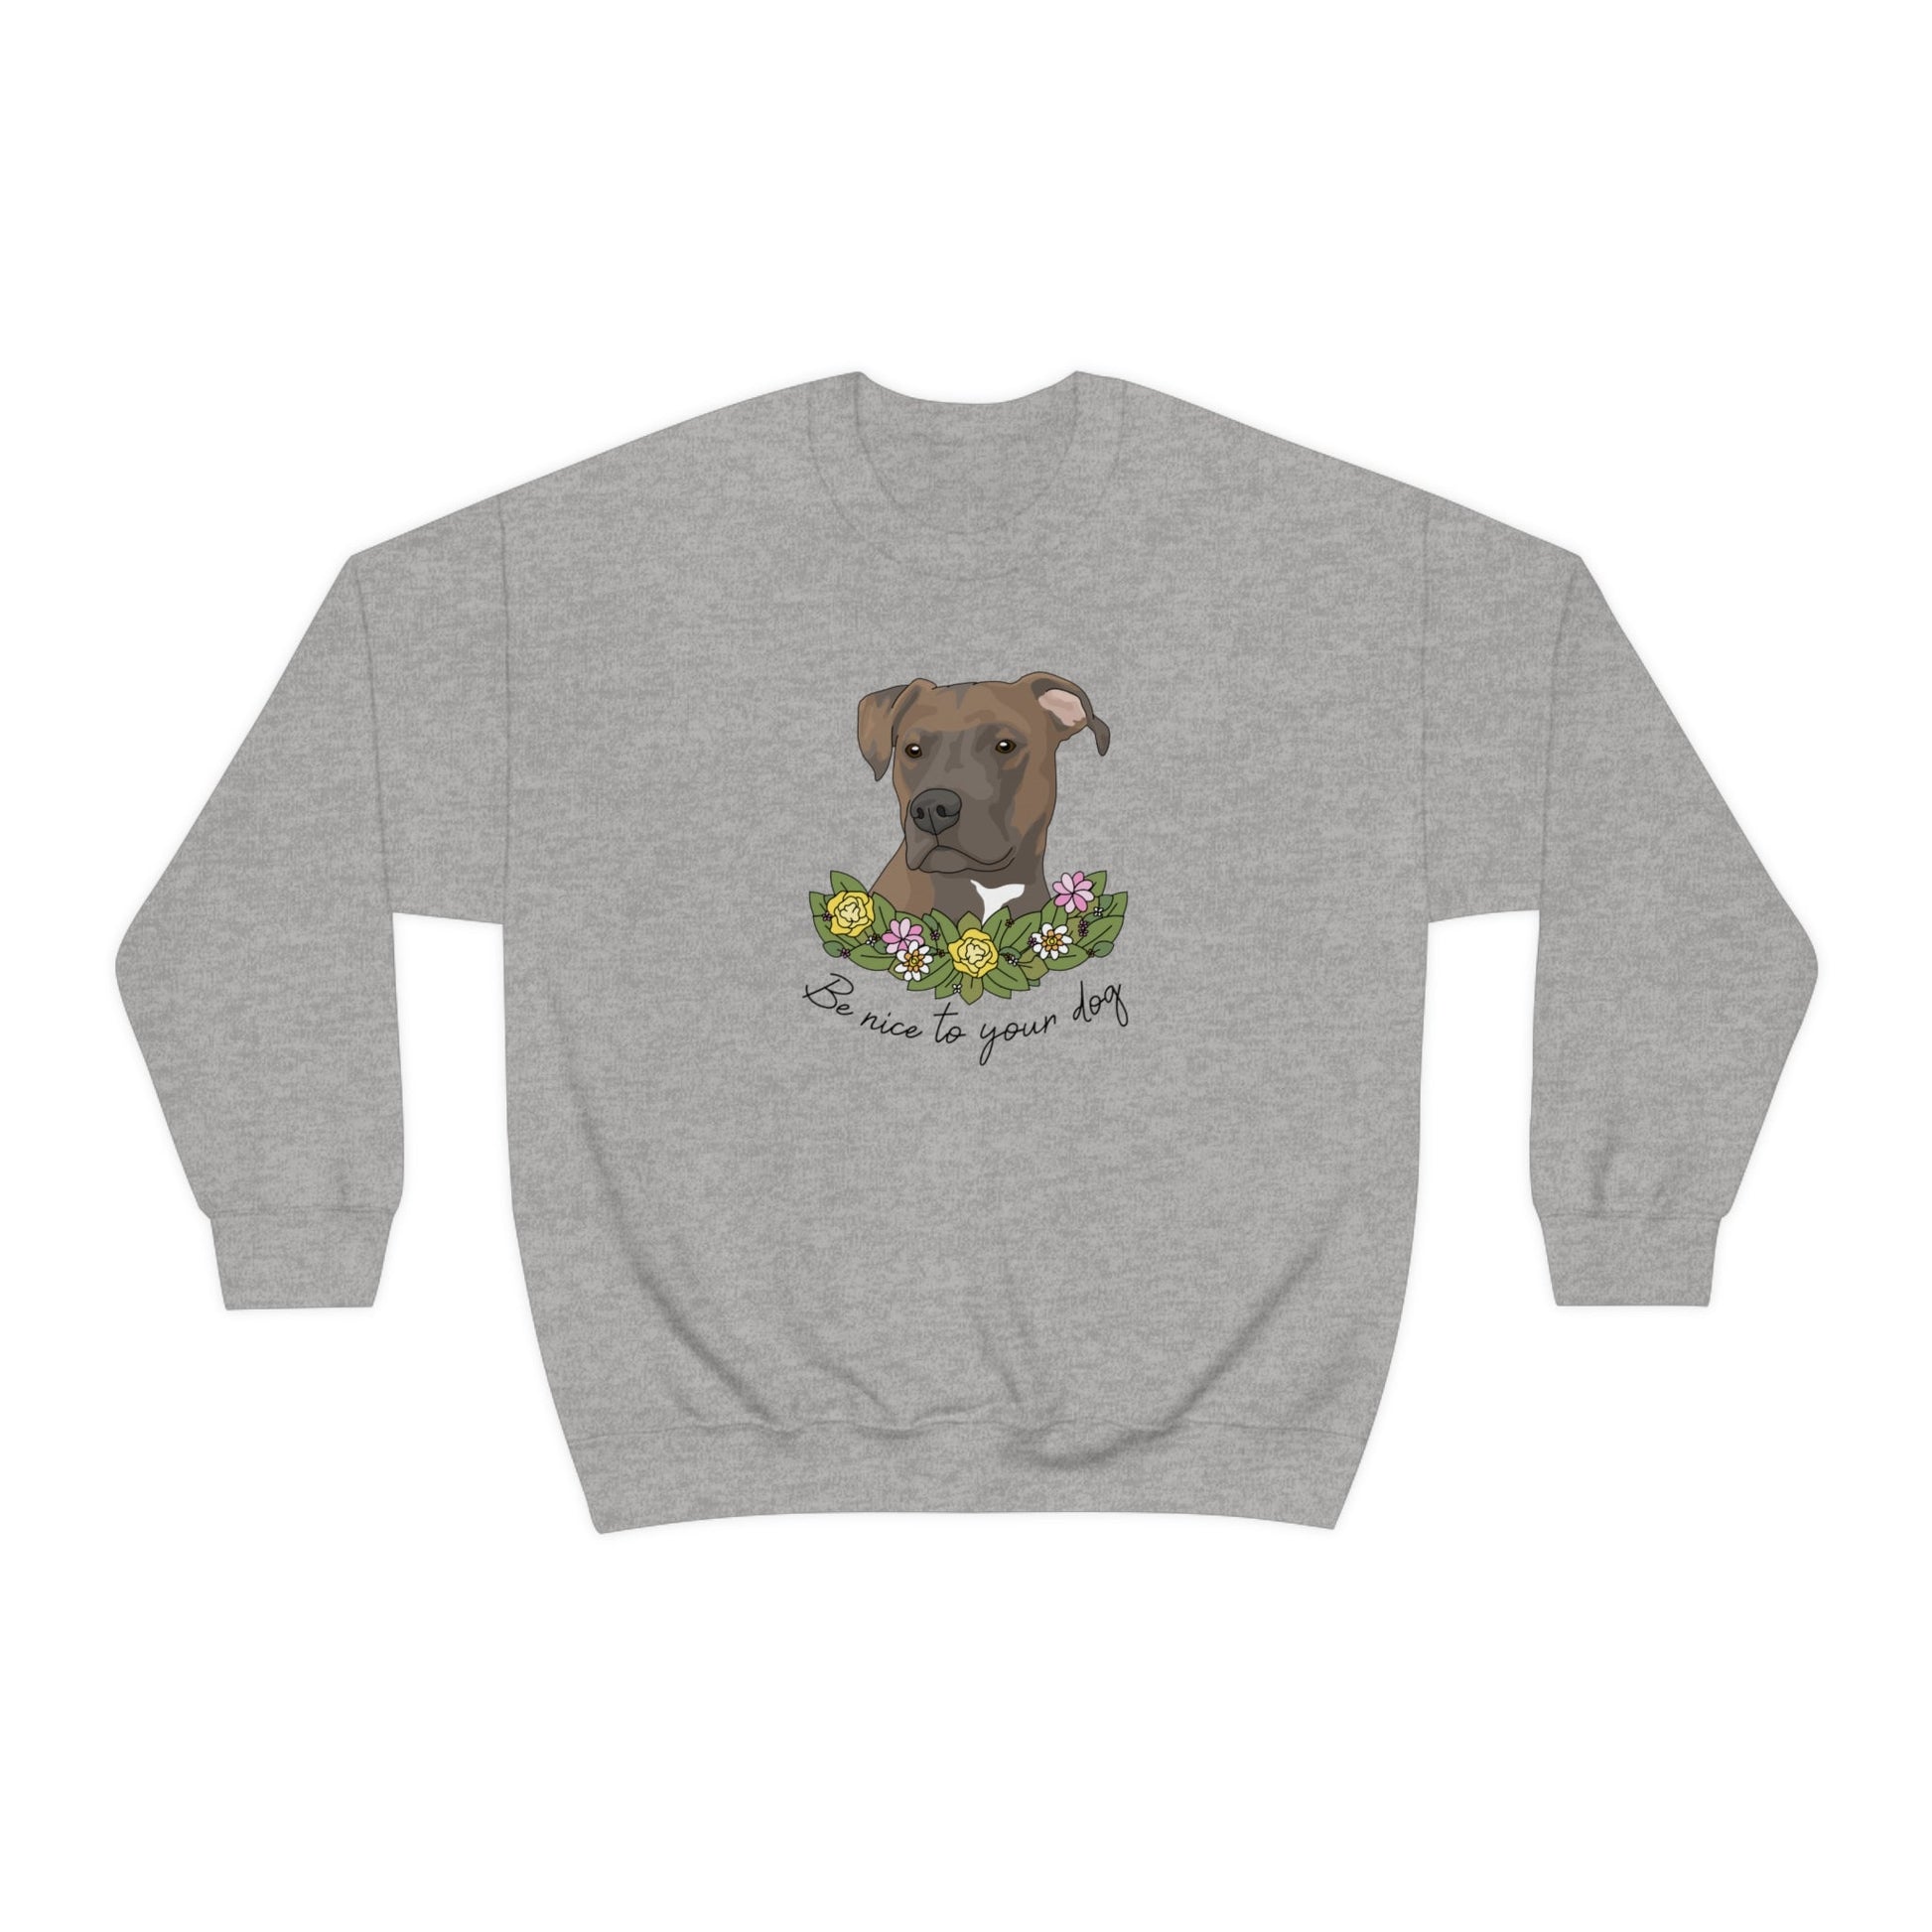 Be Nice to Your Dog | Crewneck Sweatshirt - Detezi Designs-14873384001743543470